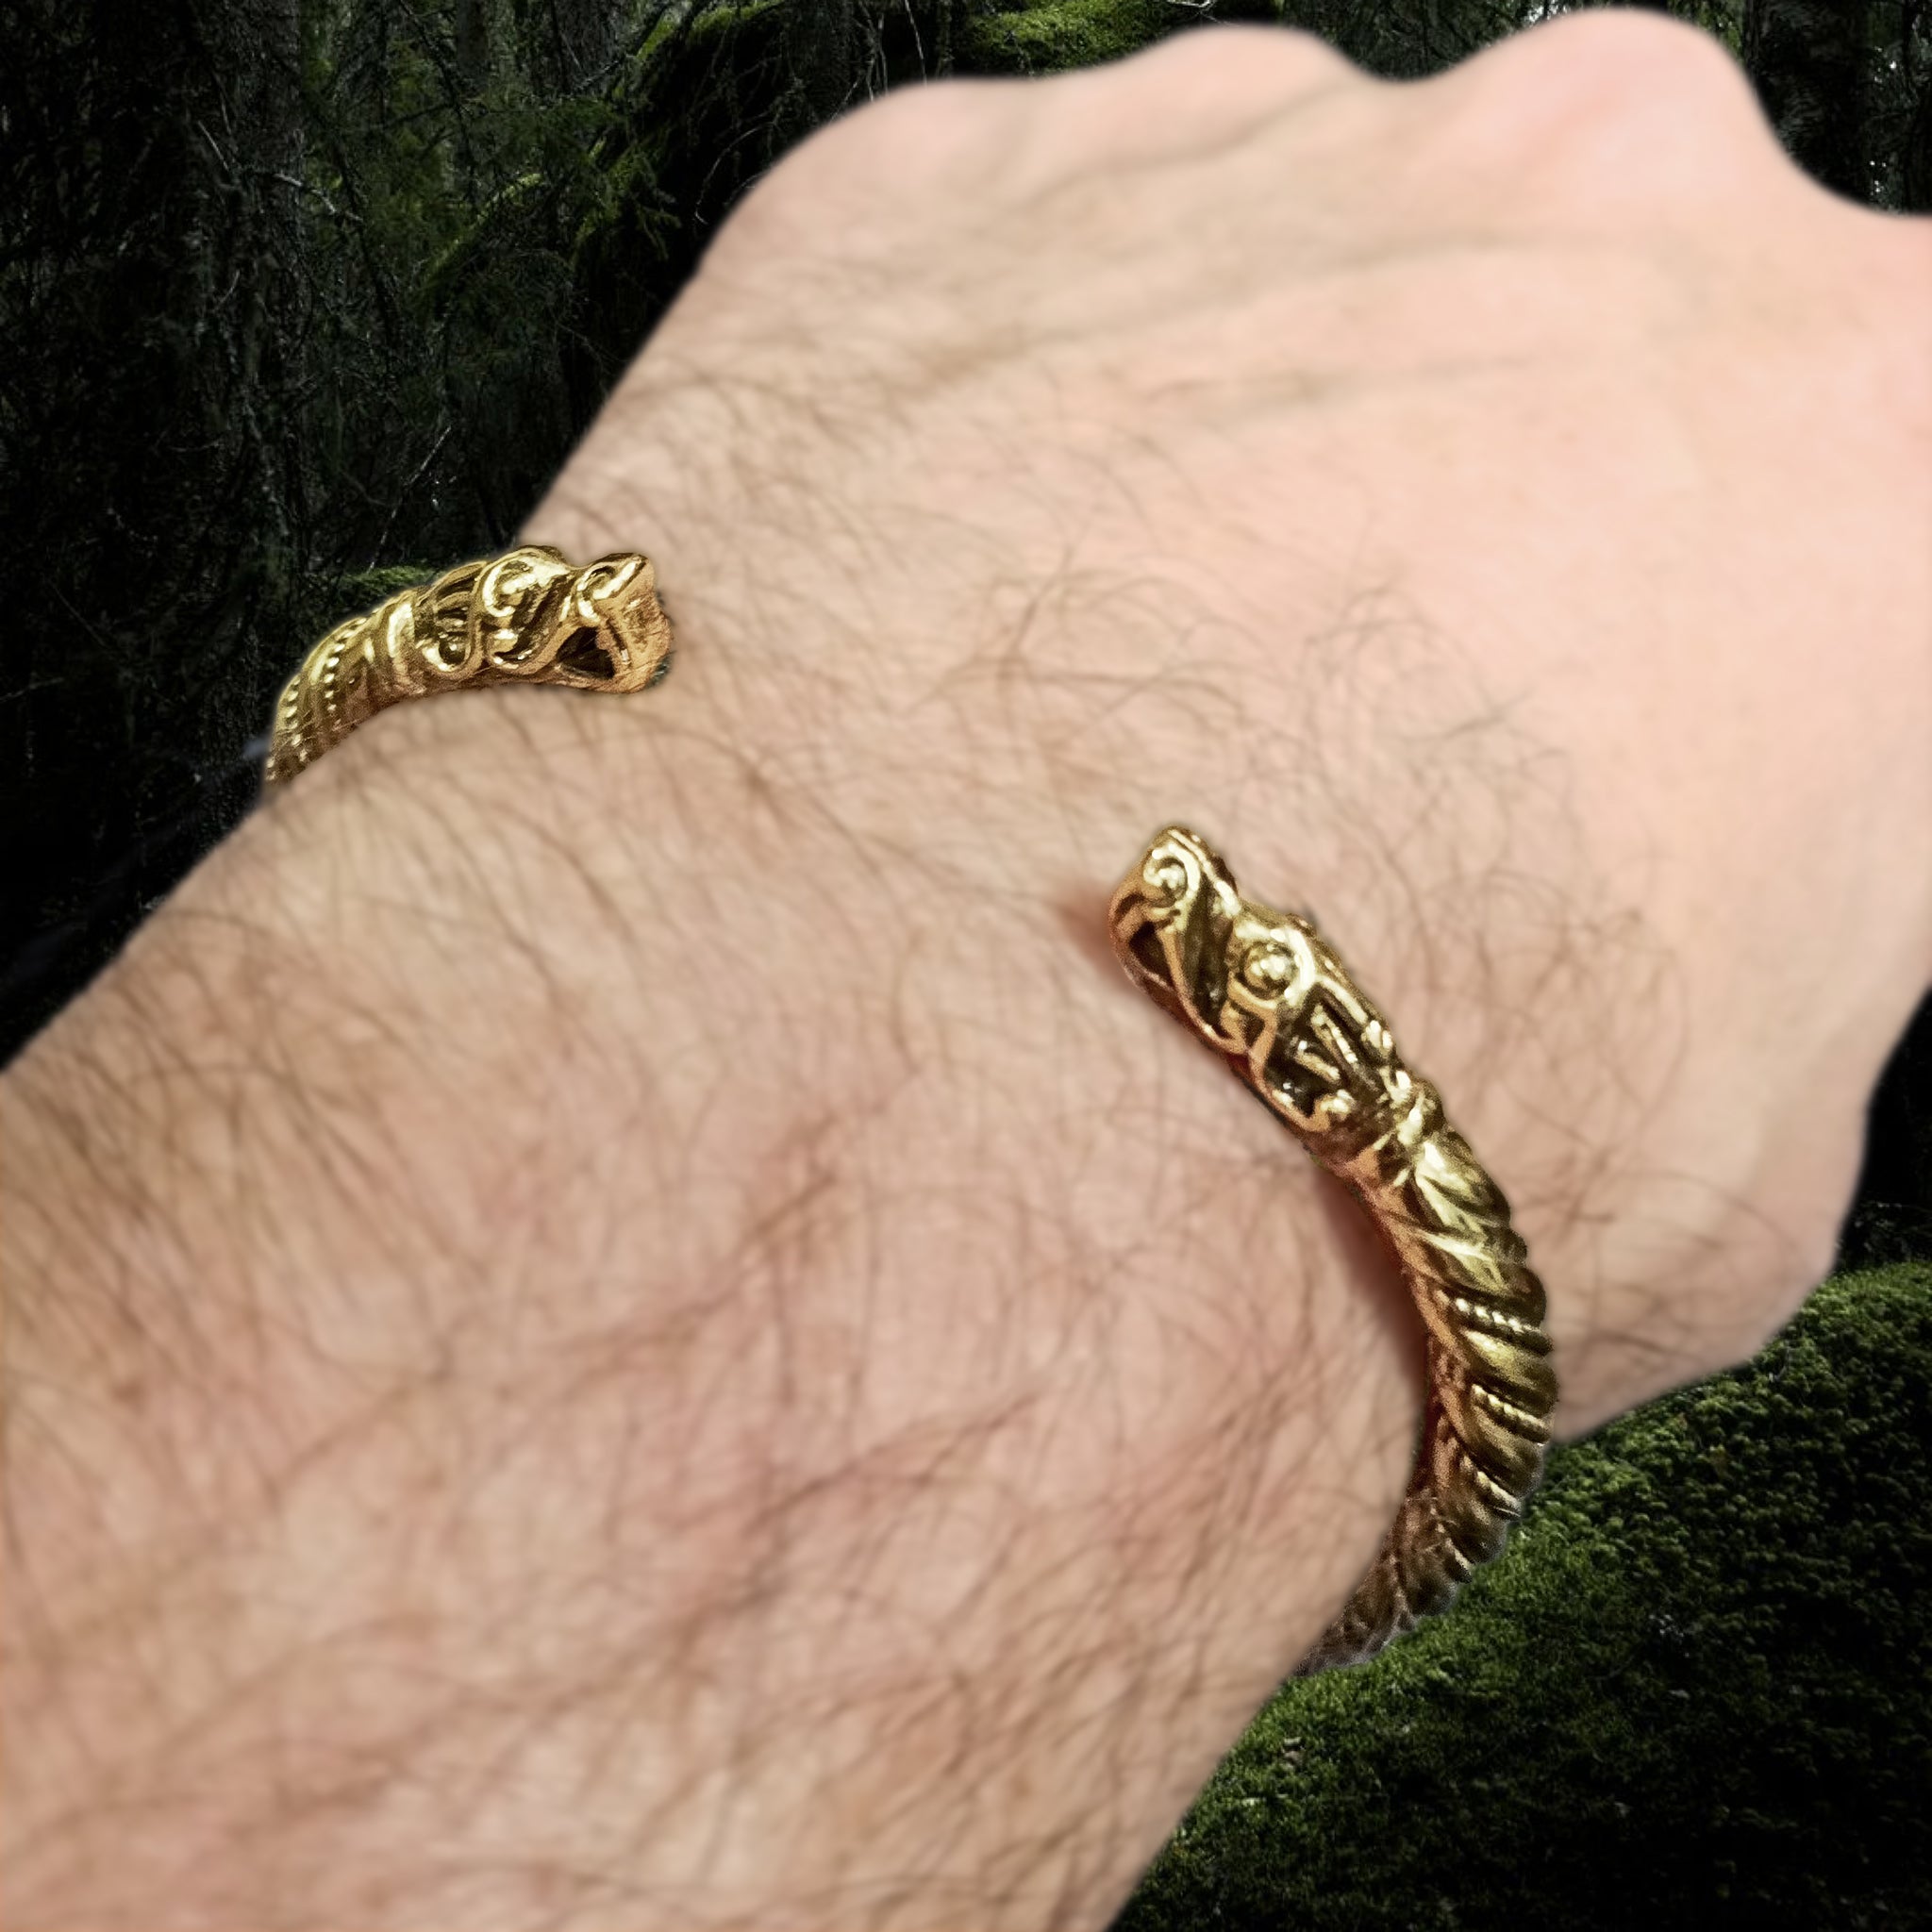 Handmade Twisted Bronze Bracelet With Gotlandic Dragon Heads on Wrist